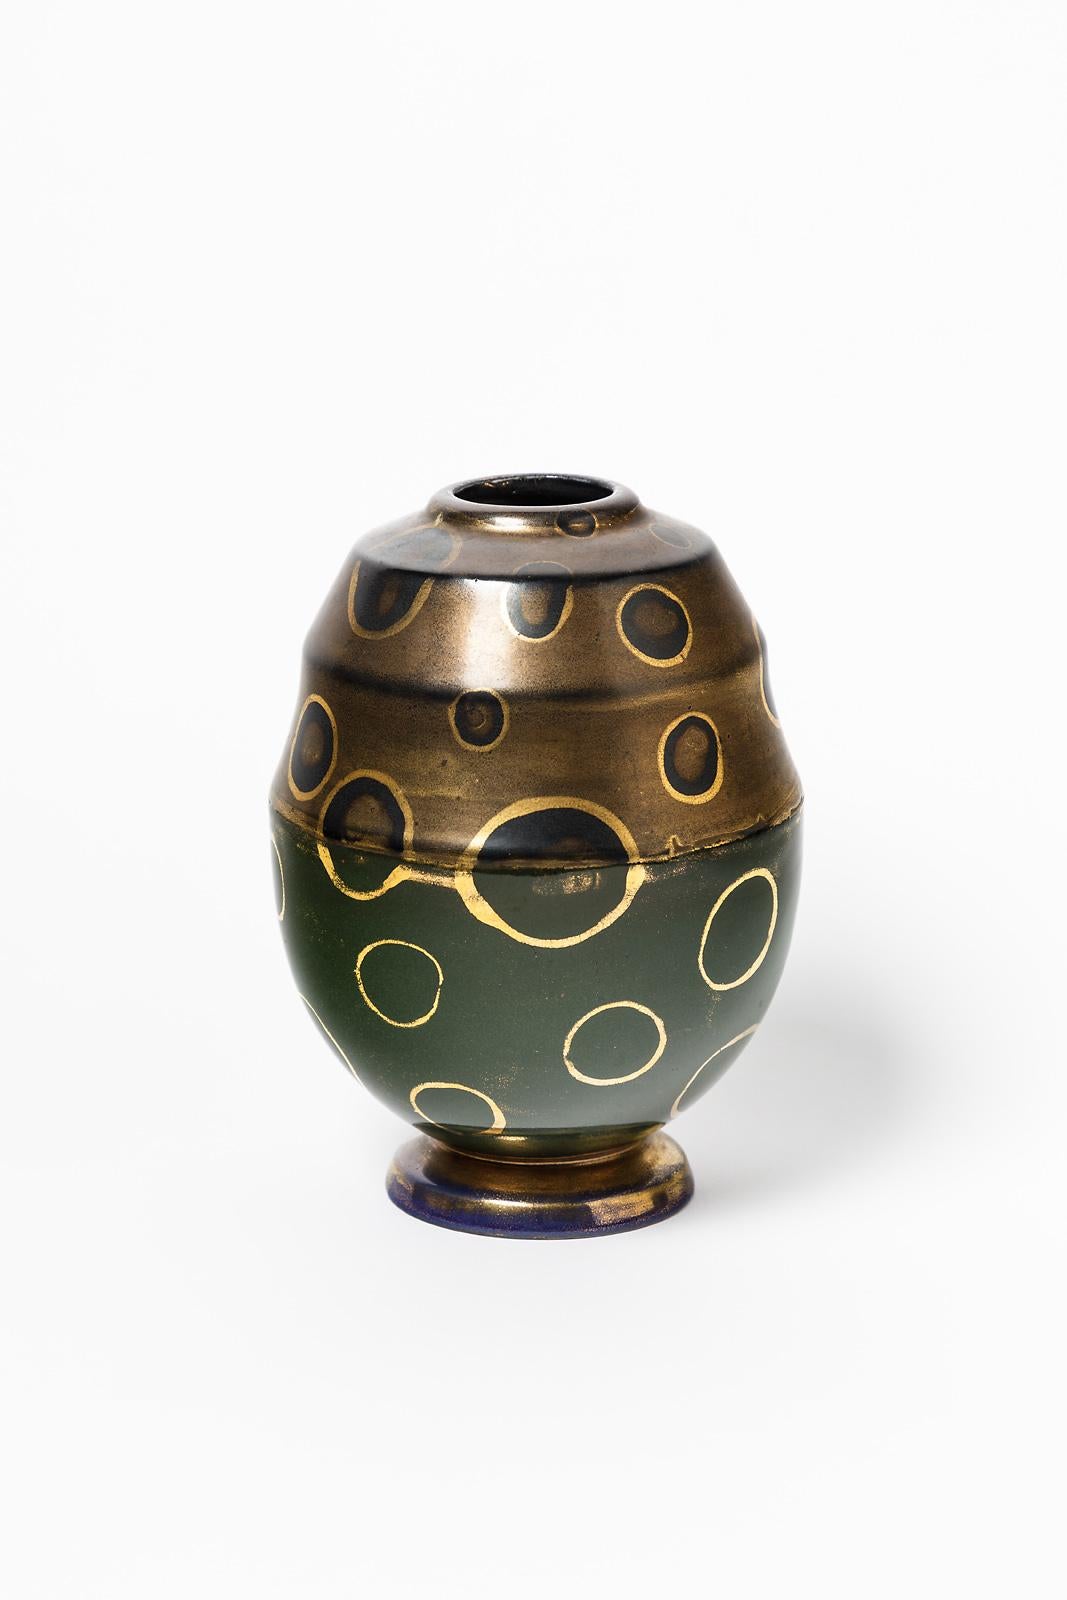 Lucien Brisdoux

Circa 1930

Original art deco pottery ceramic vase

Signed under the base

Green and gold ceramic glazes colors

Measures: height : 20 cm, large 14 cm.